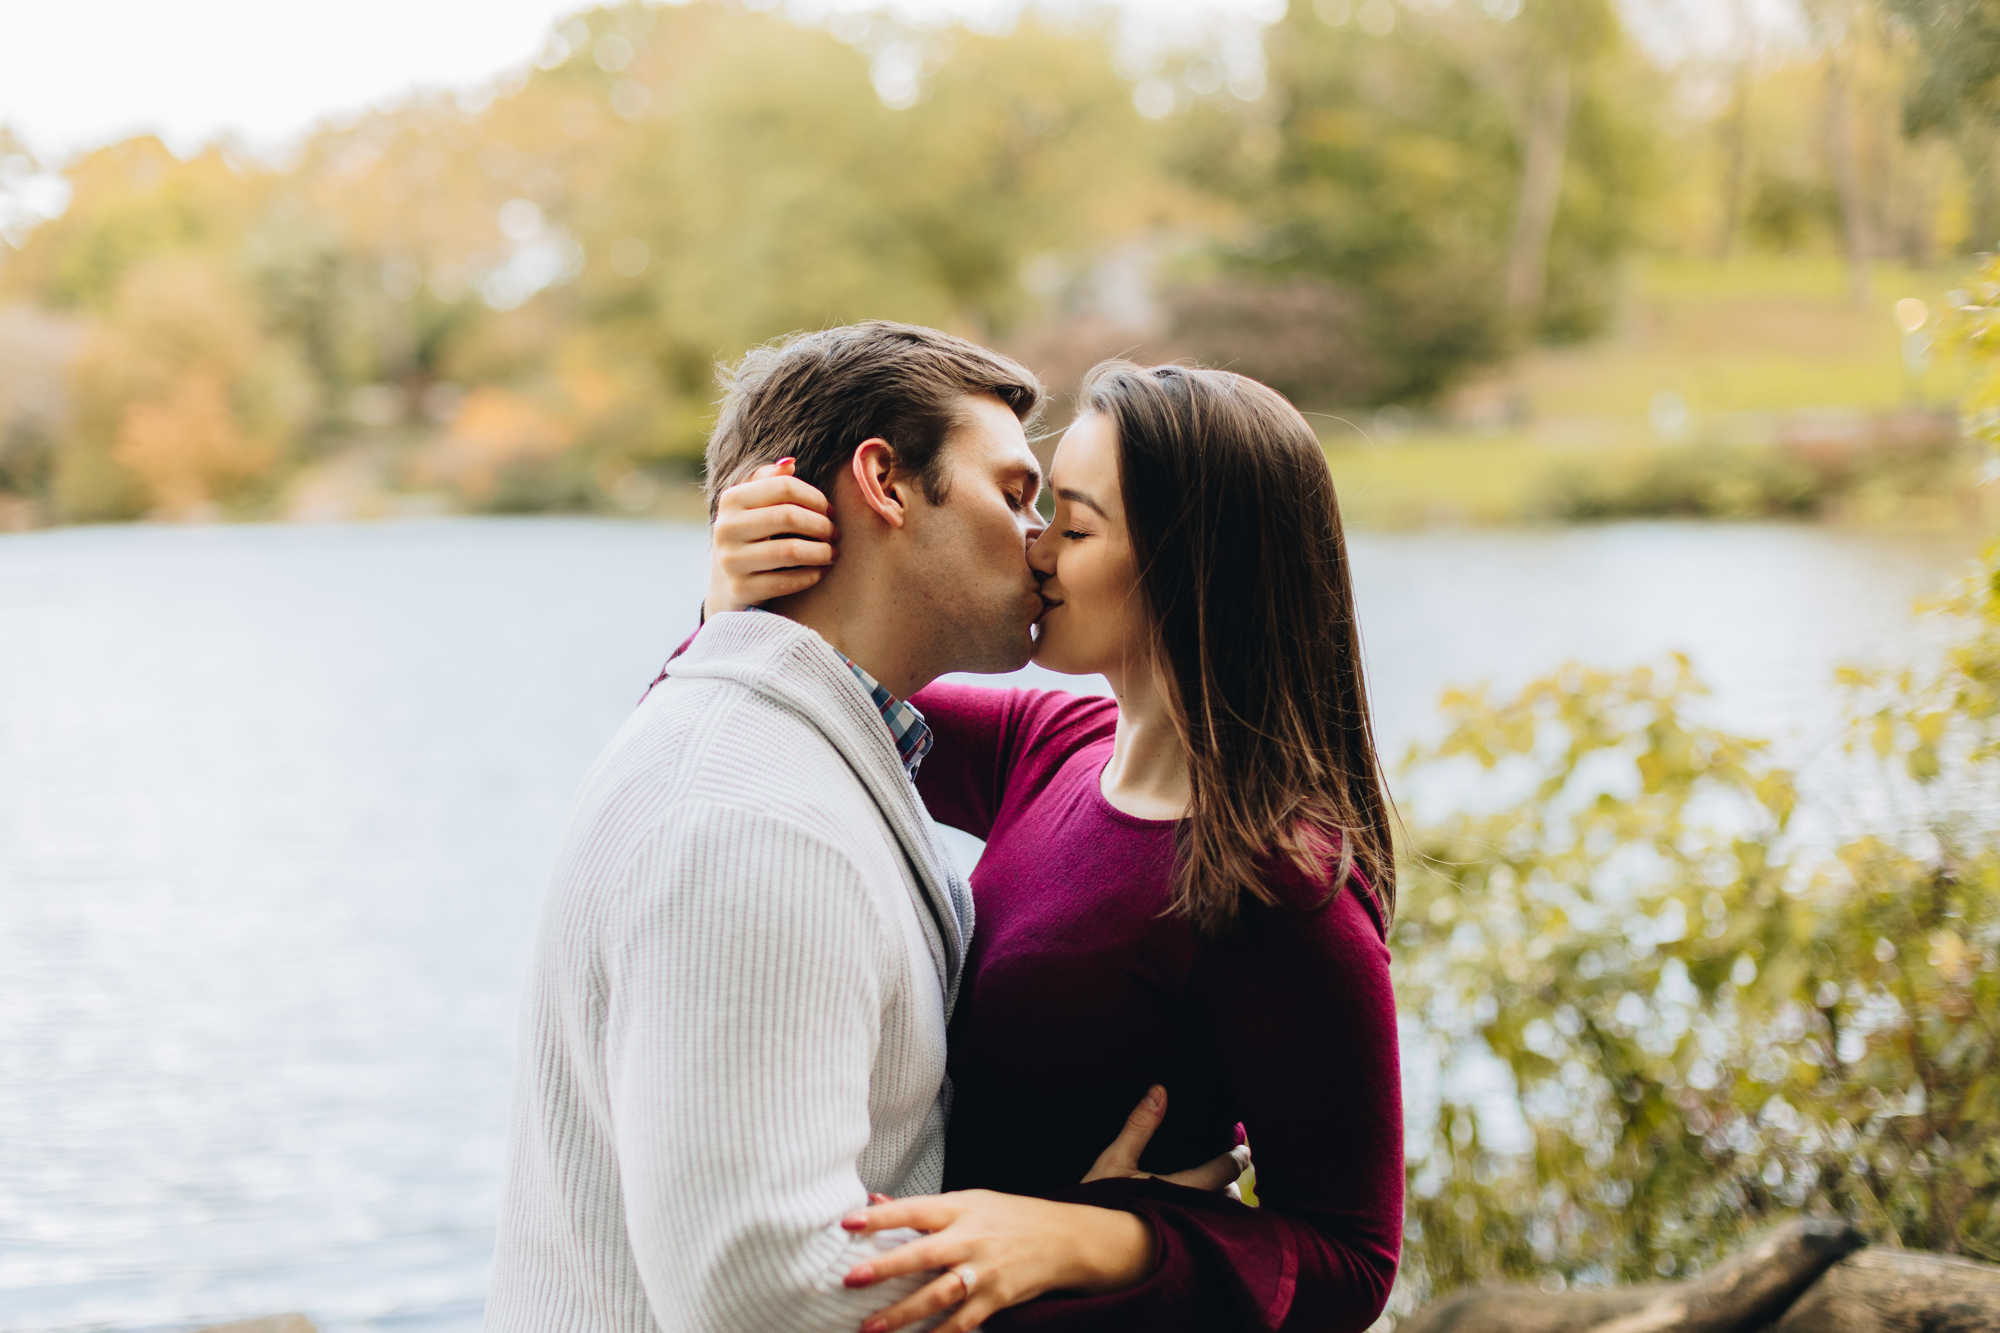 Joyful Fall Engagement Photos in Central Park New York